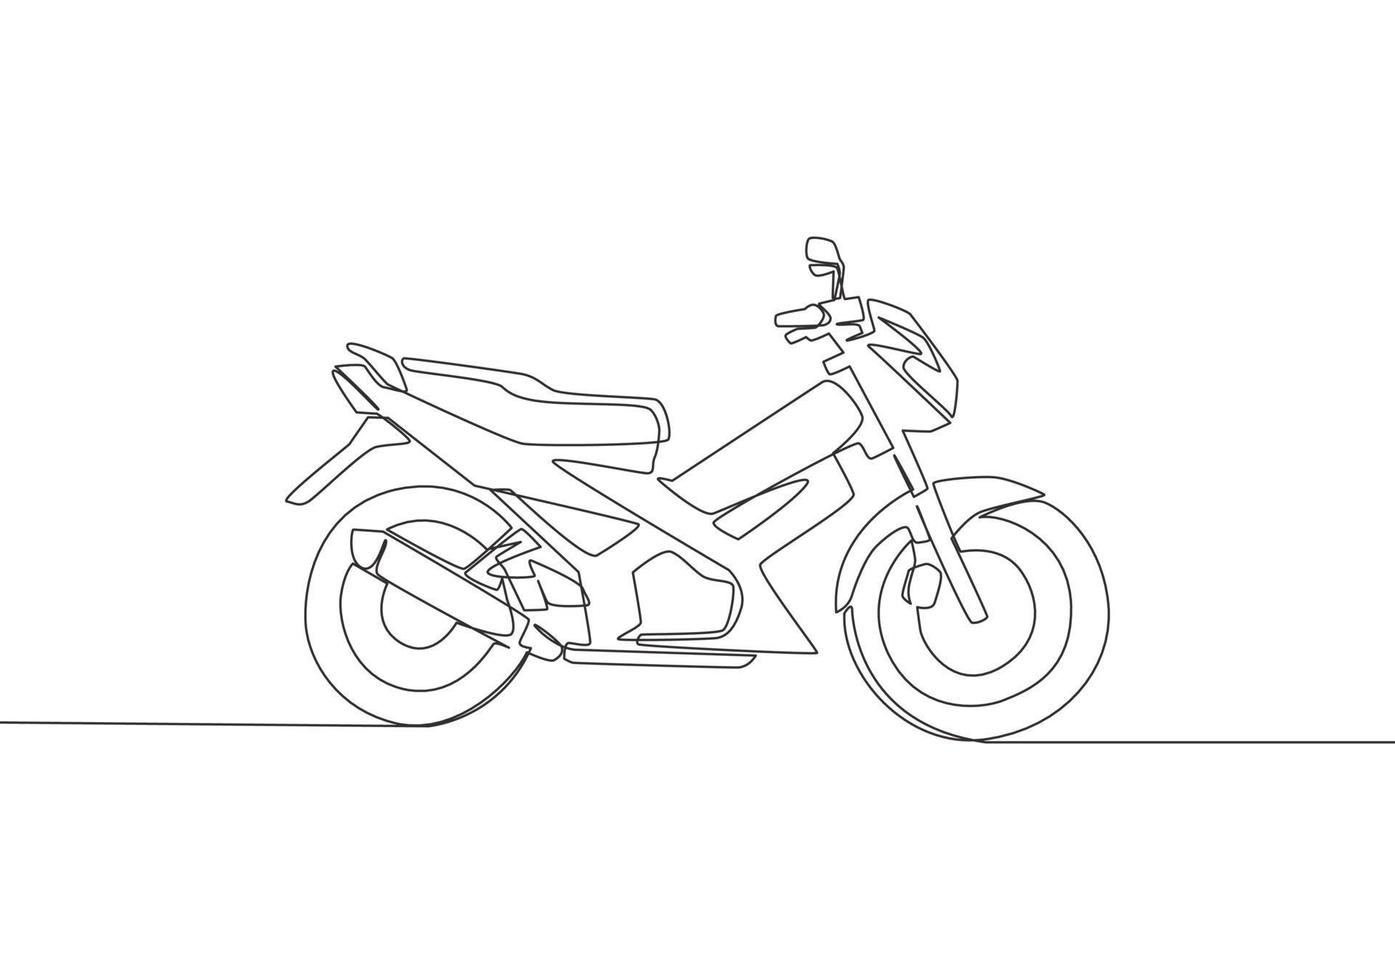 uno soltero línea dibujo de asiático columna vertebral moto logo. urbano paseo motocicleta concepto. continuo línea dibujar diseño vector ilustración